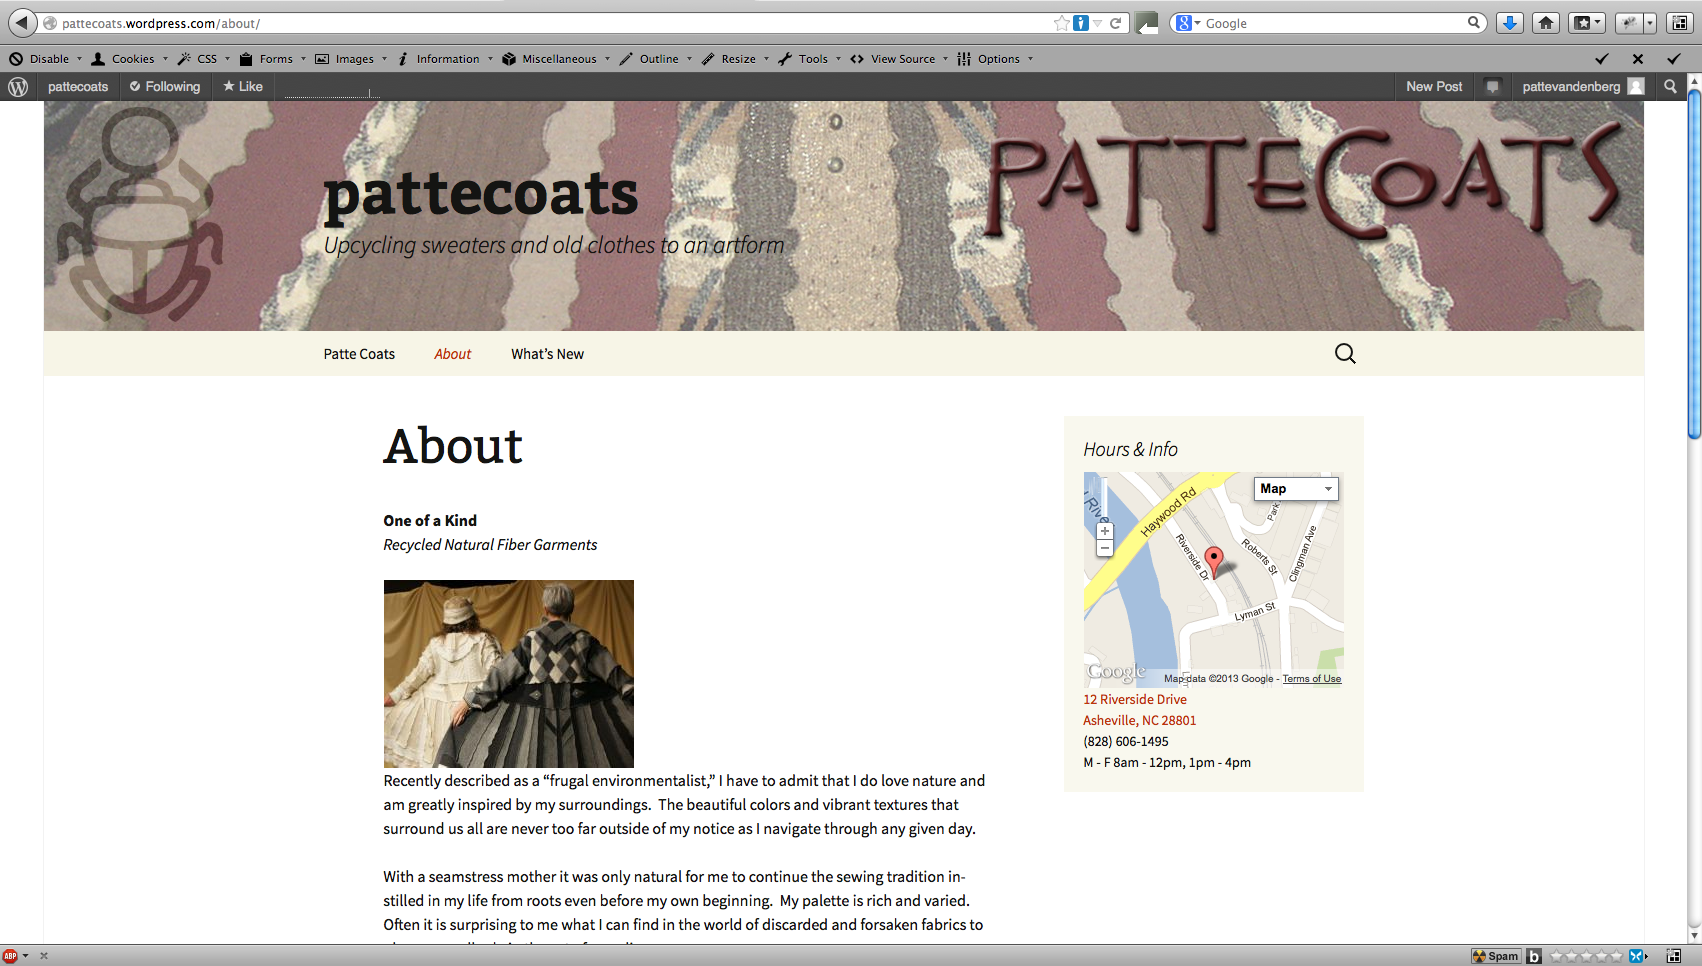 pattecoats-about